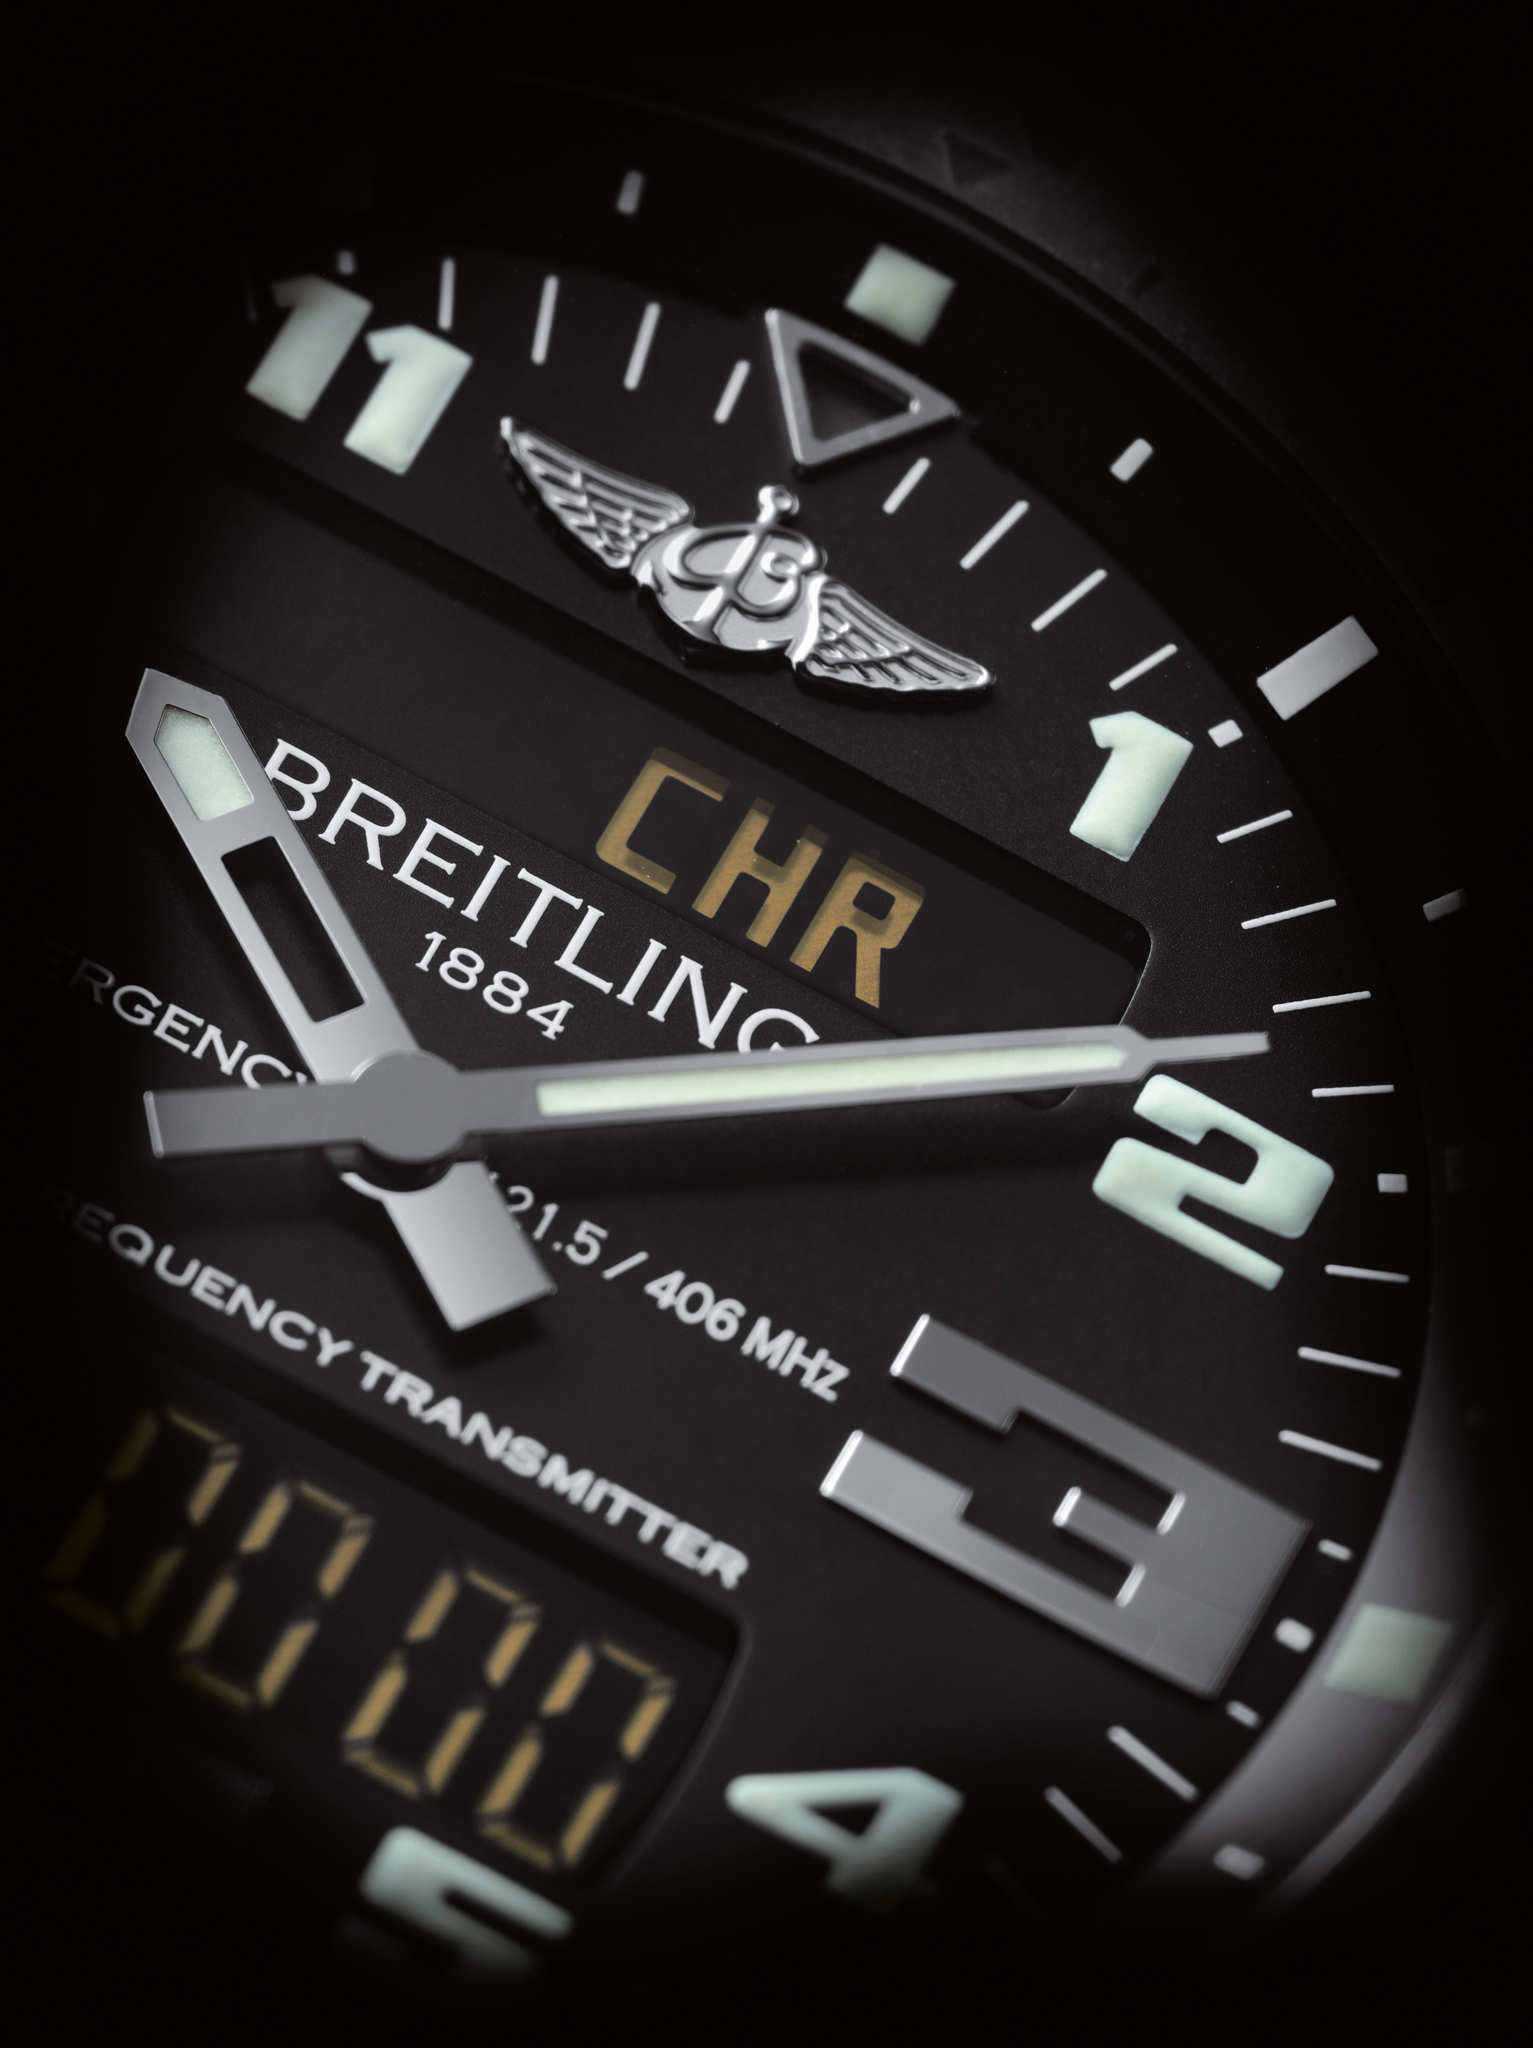 Breitling timing evolutionbreitling Time Cycle Evolution